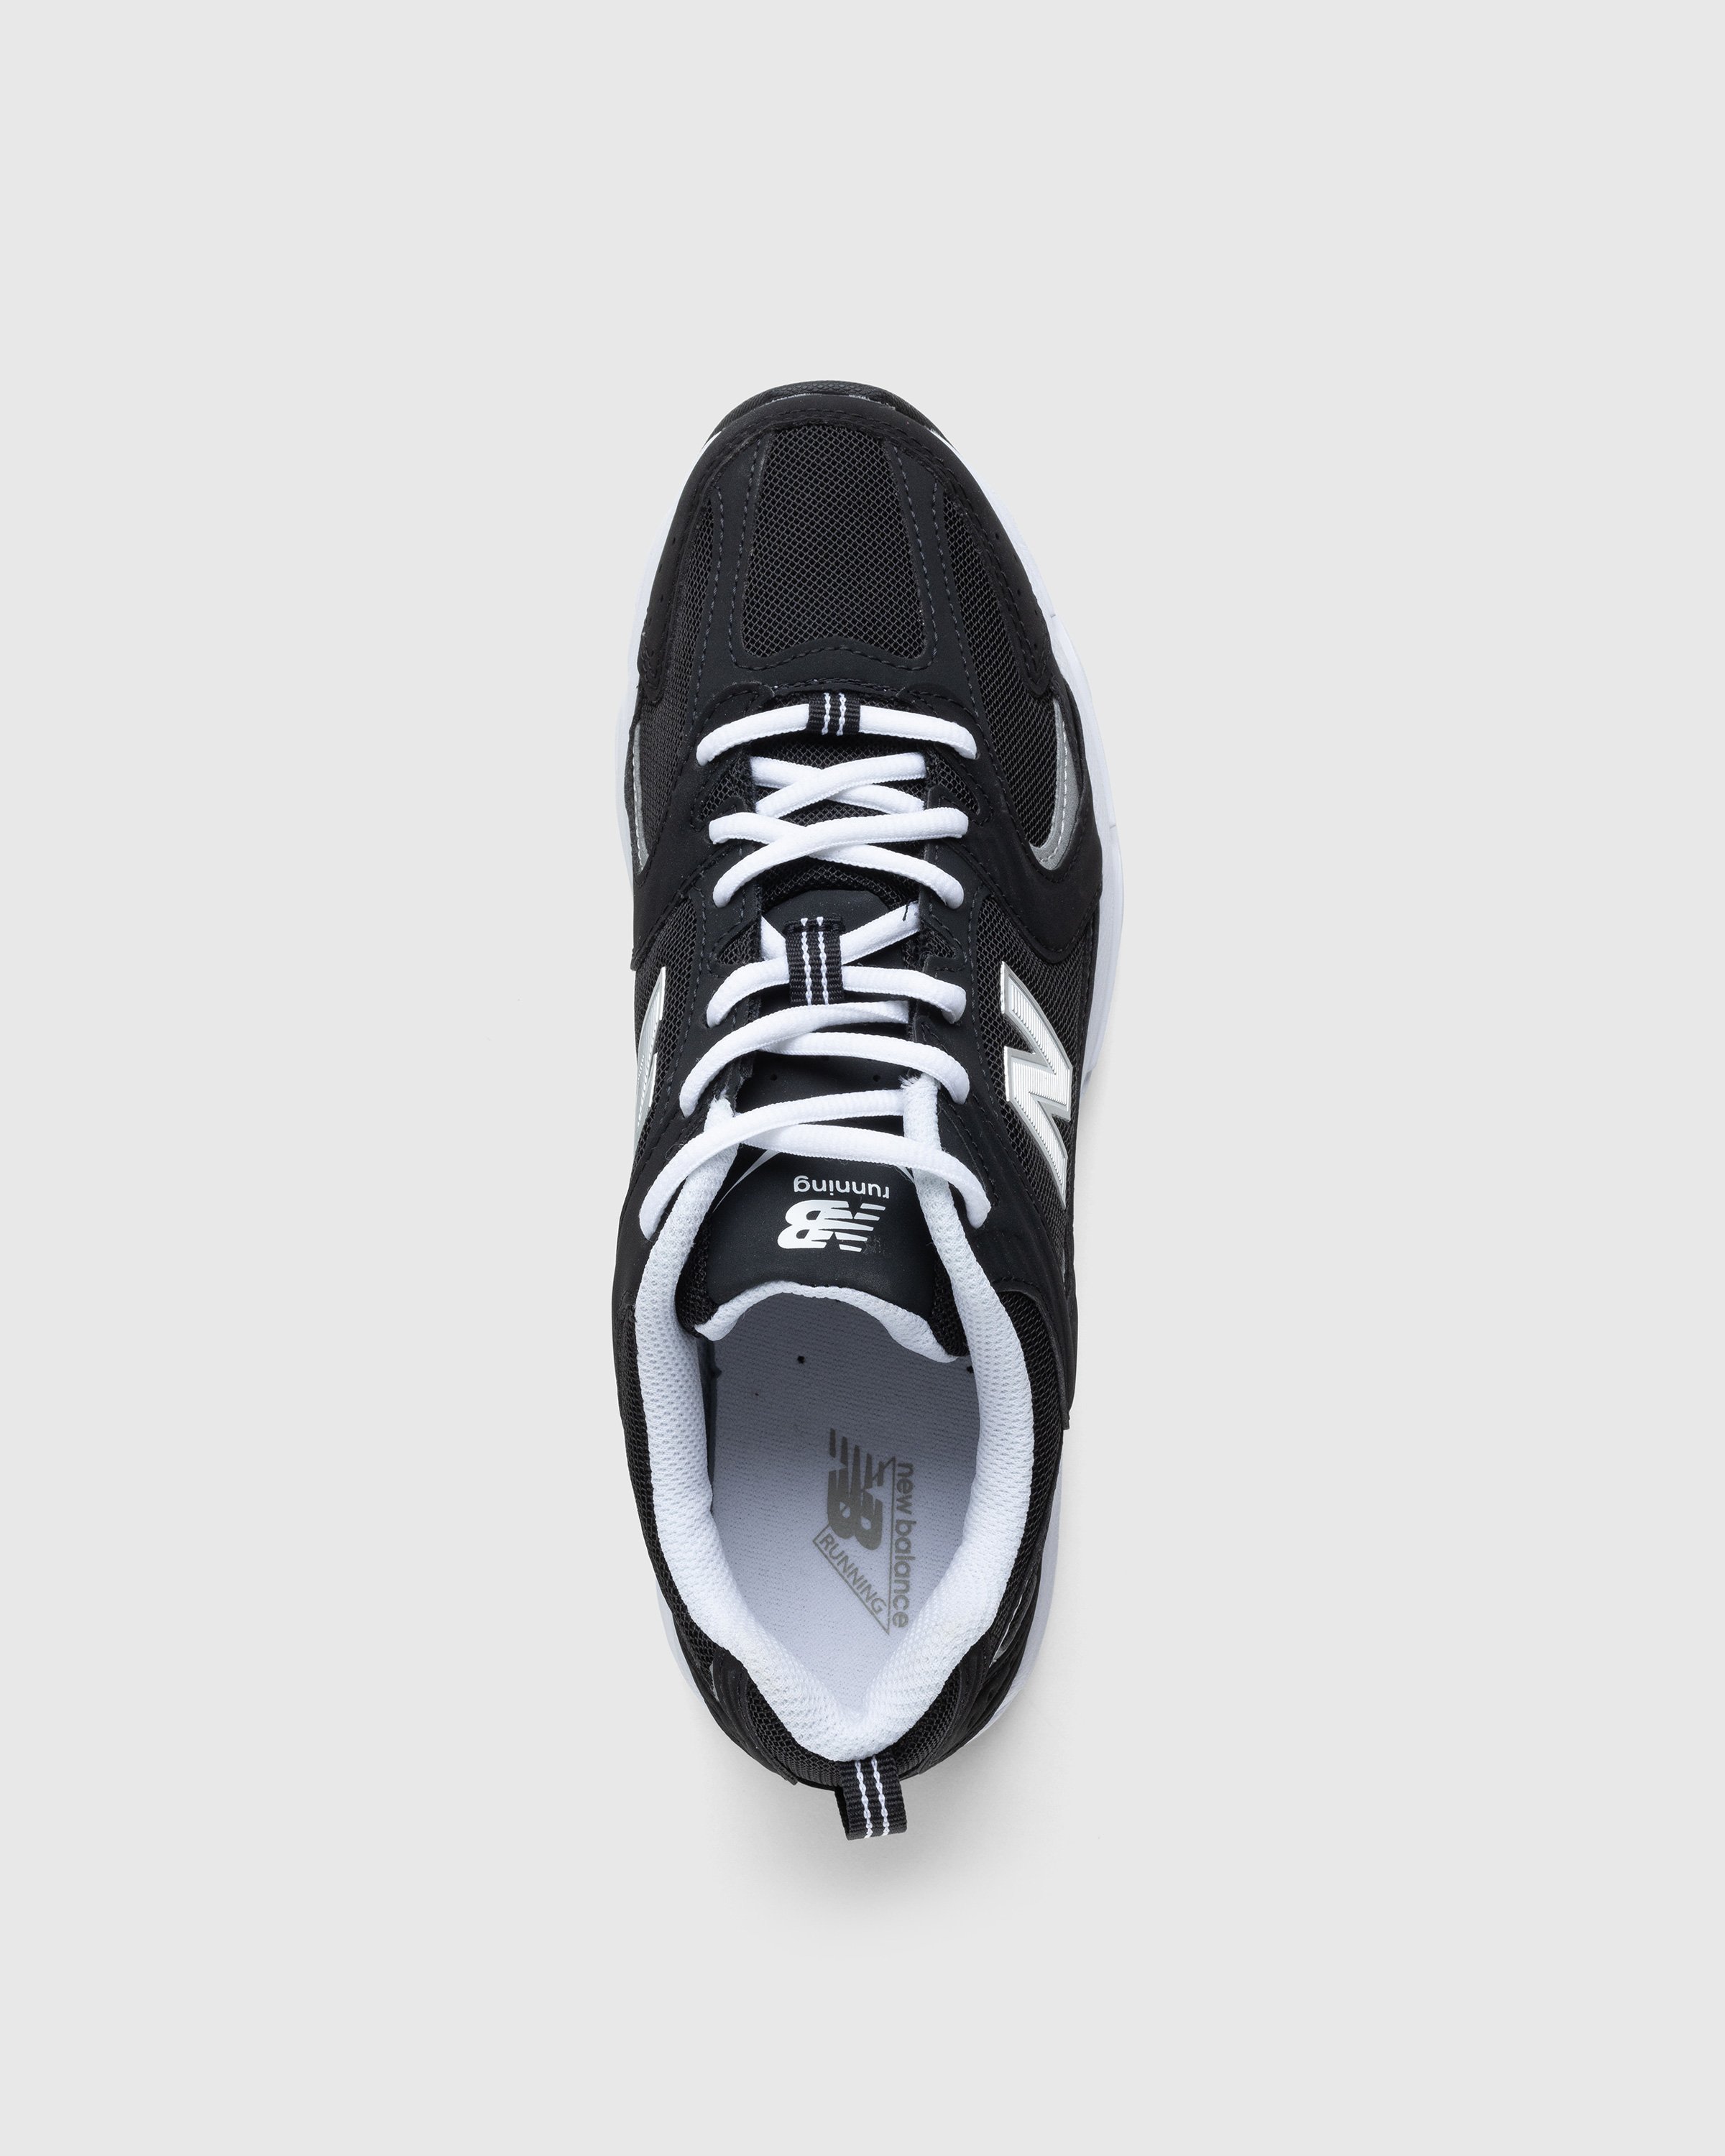 New Balance - MR530SMN Phantom - Footwear - Black - Image 5